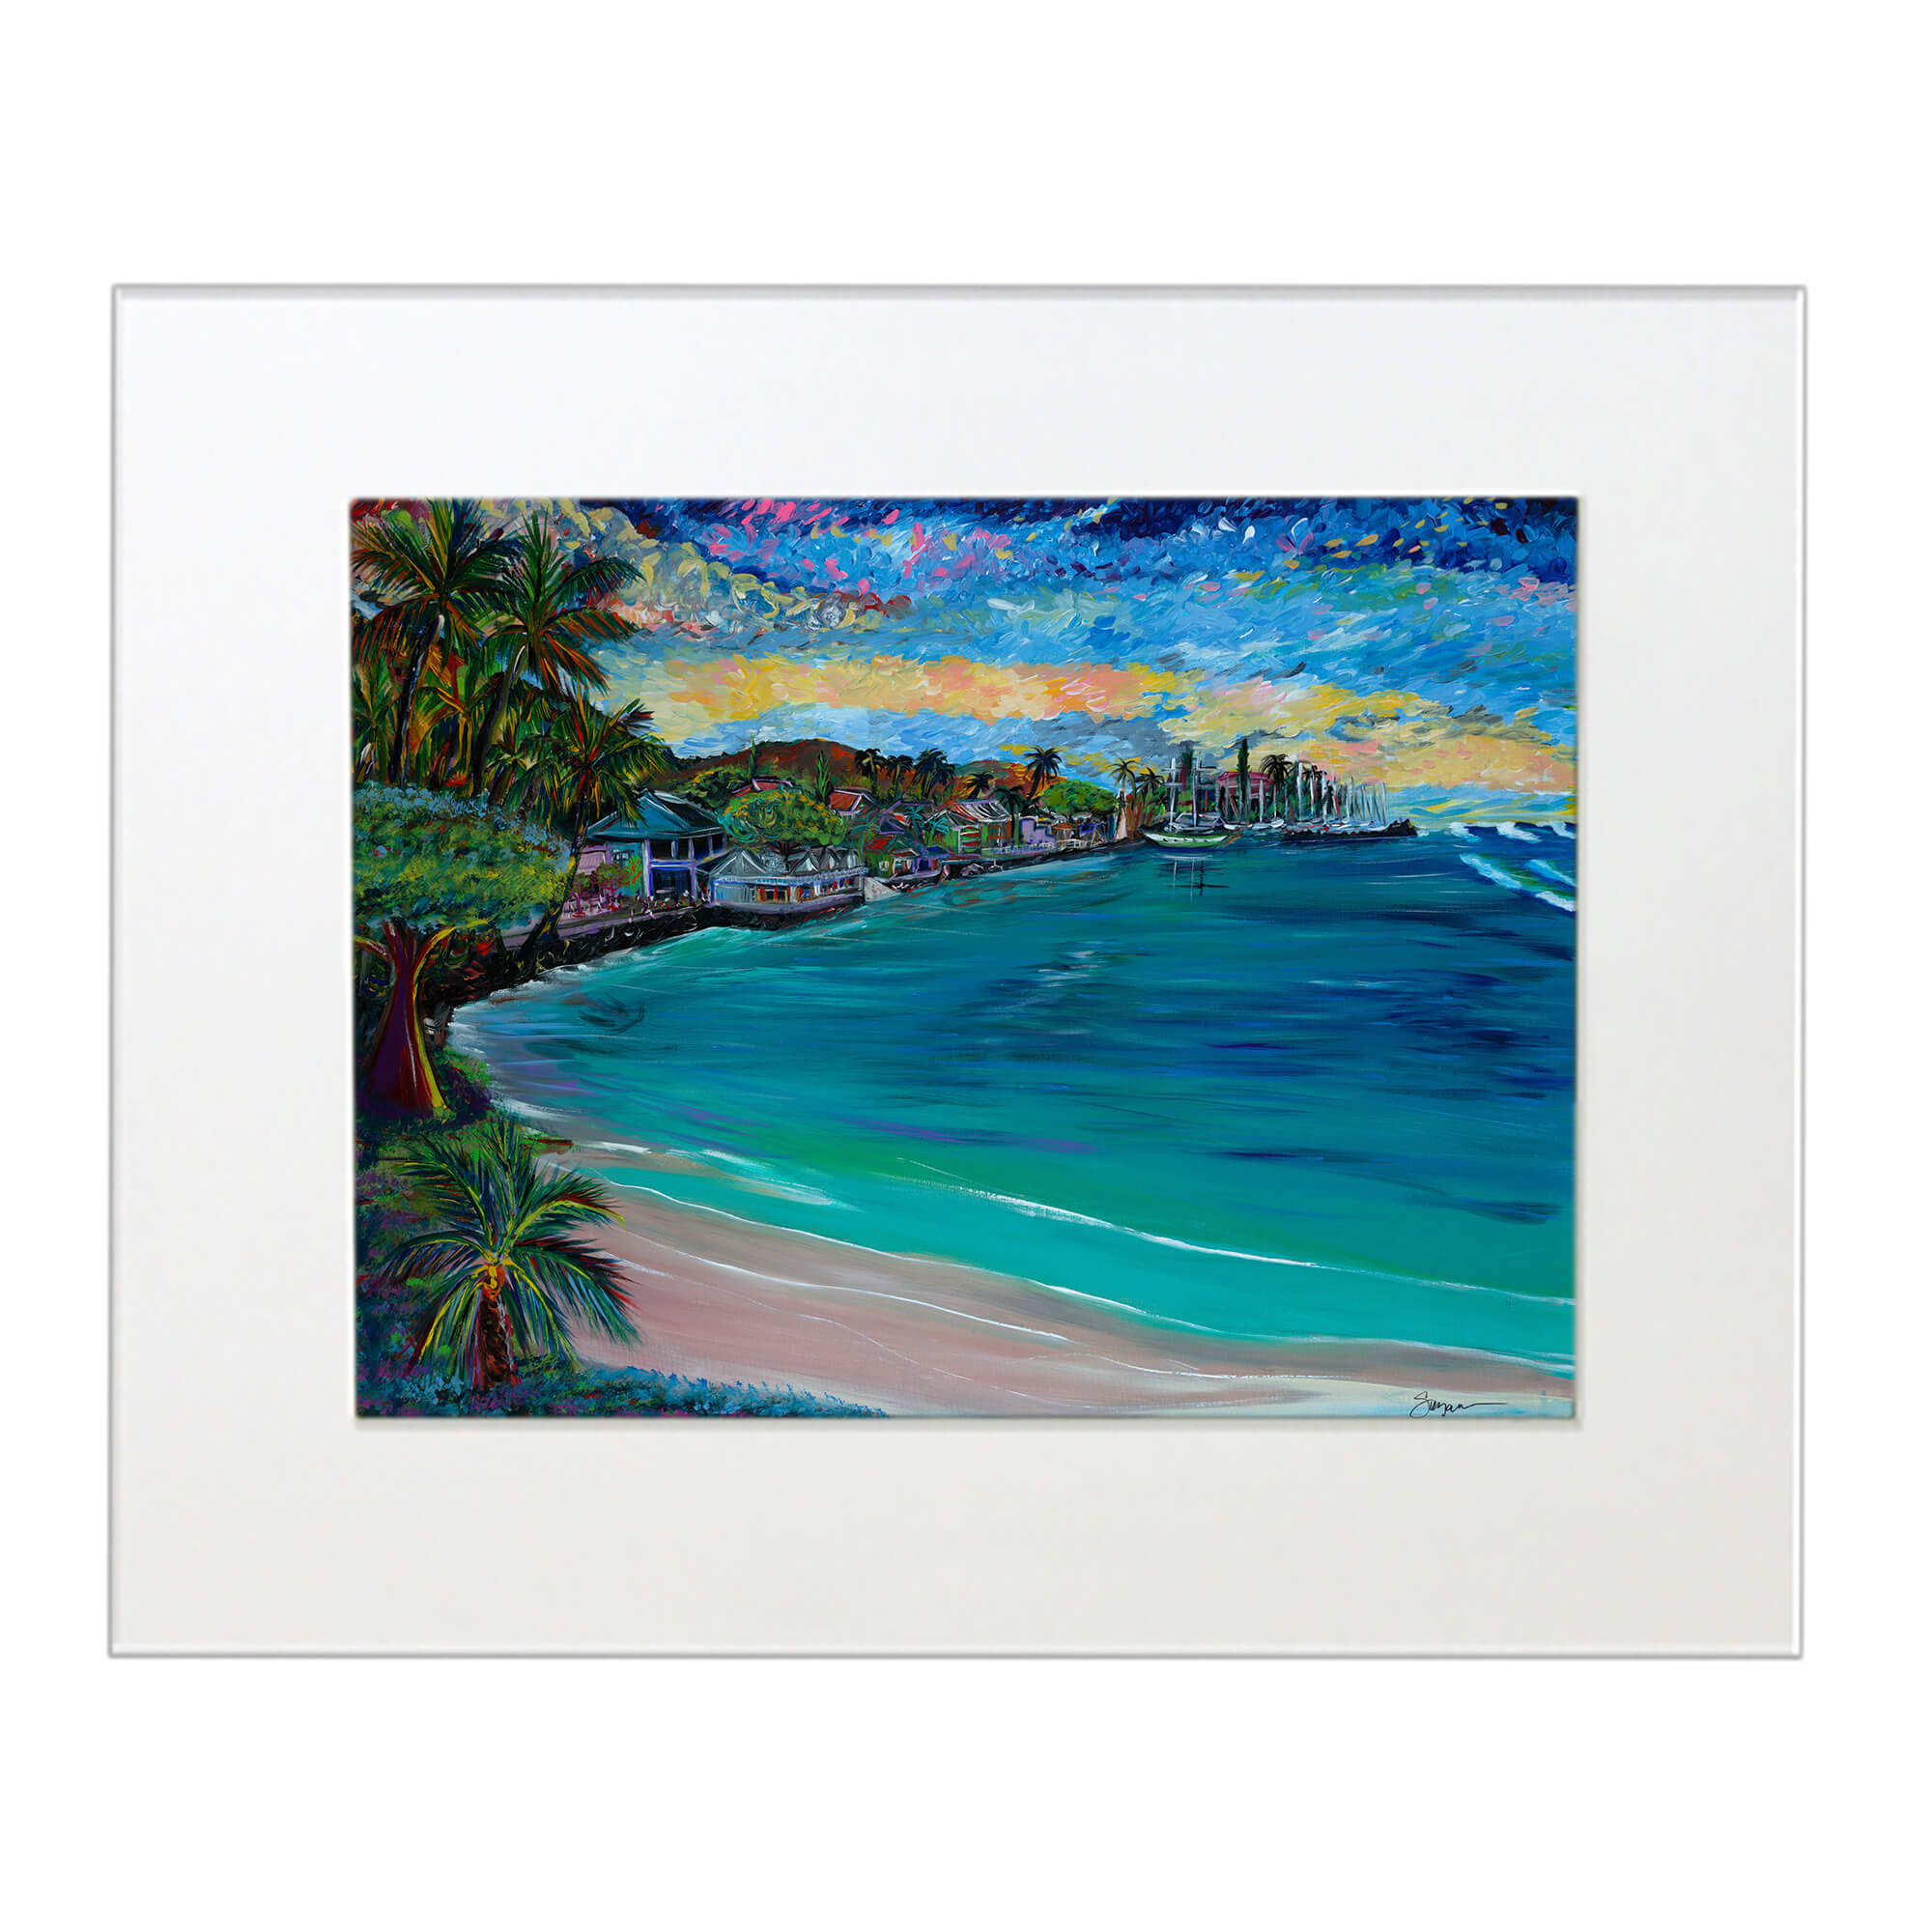 Matted art print showcasing the beach by hawaii artist Suzanne MacAdam